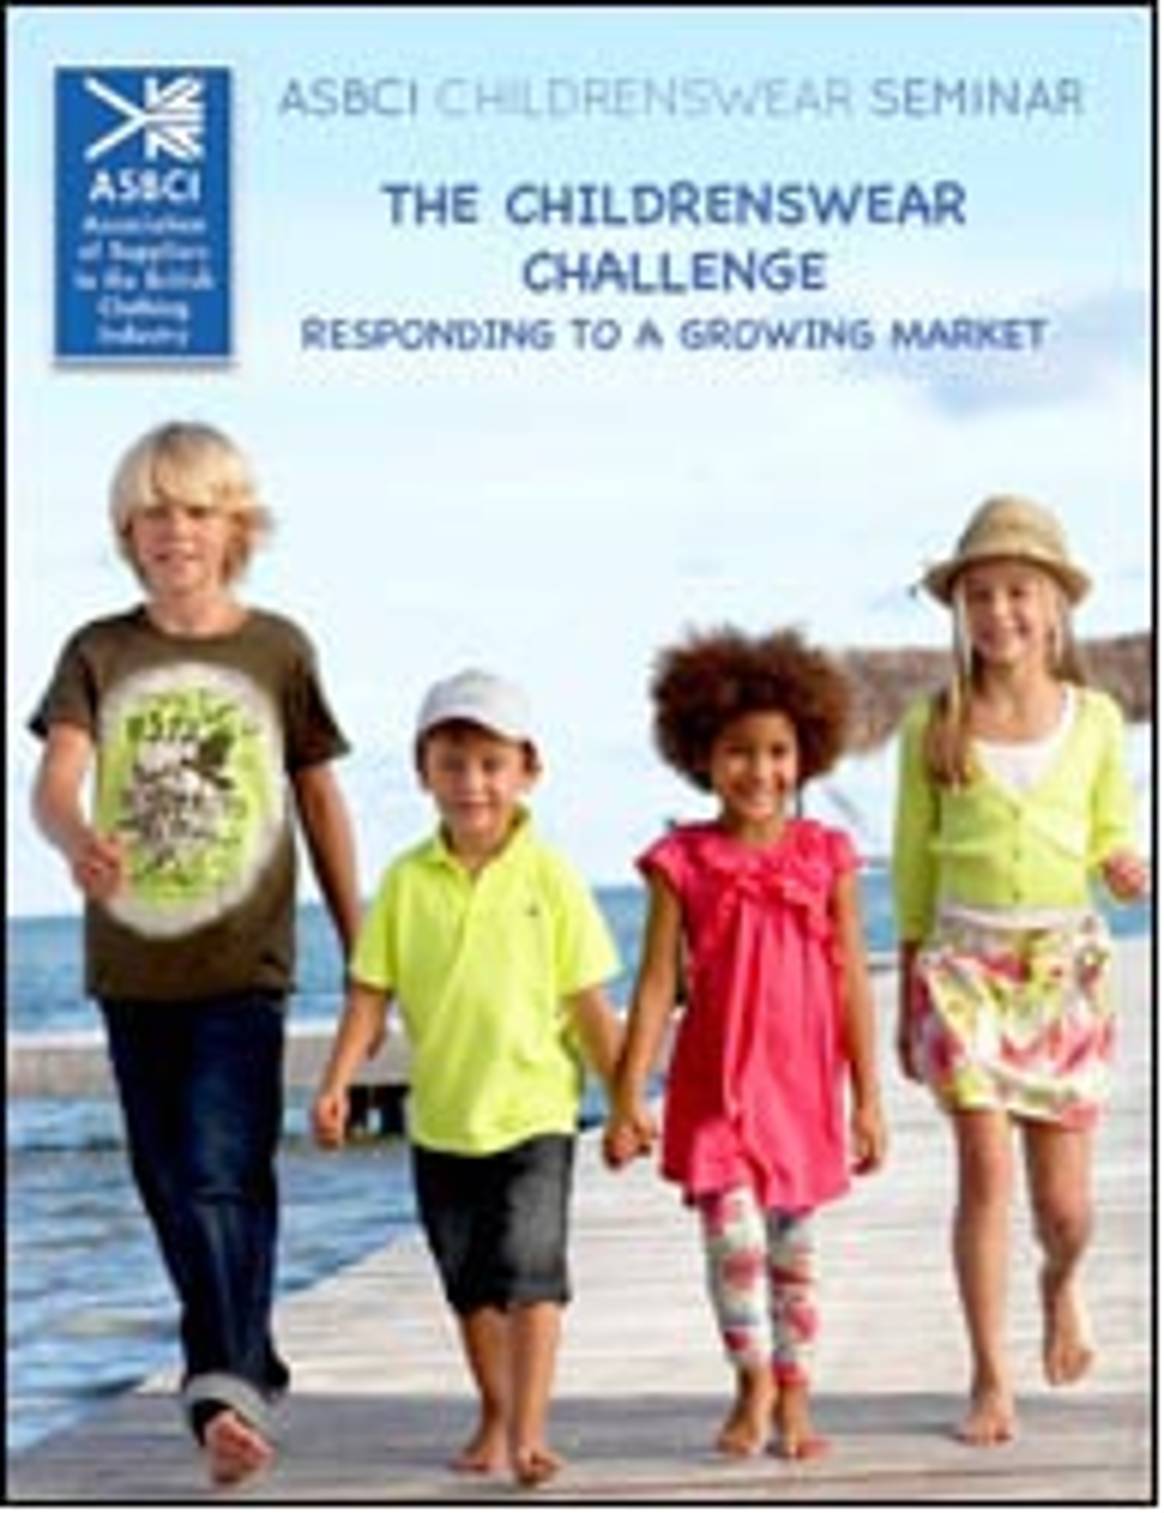 ASBCI childrenswear seminar review